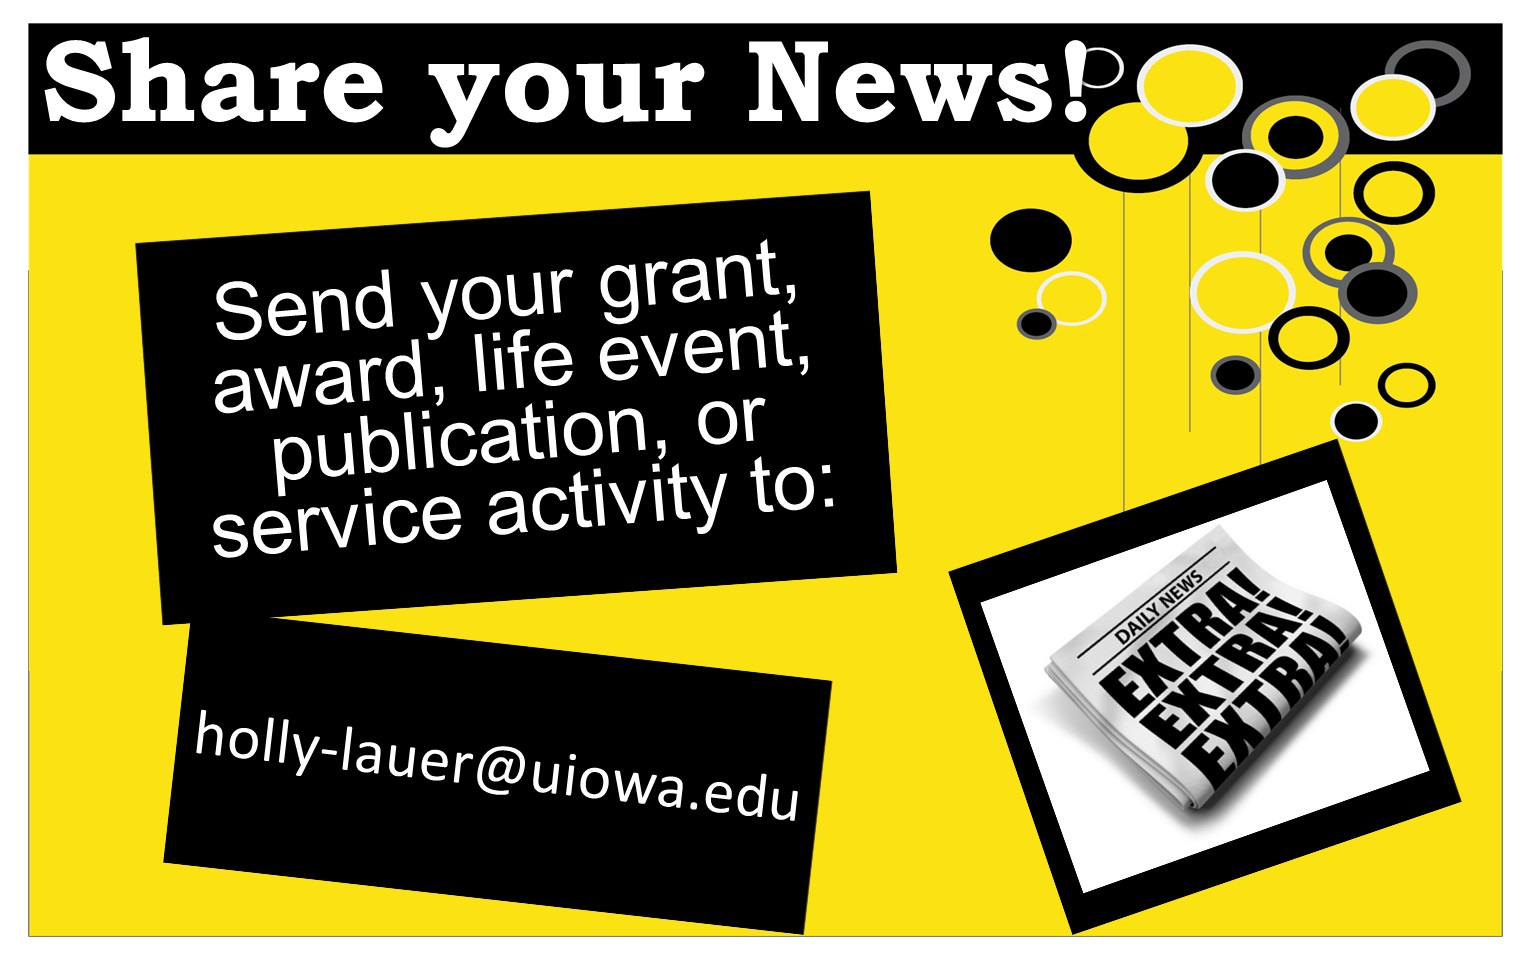 Send your news to barbara-kelley@uiowa.edu